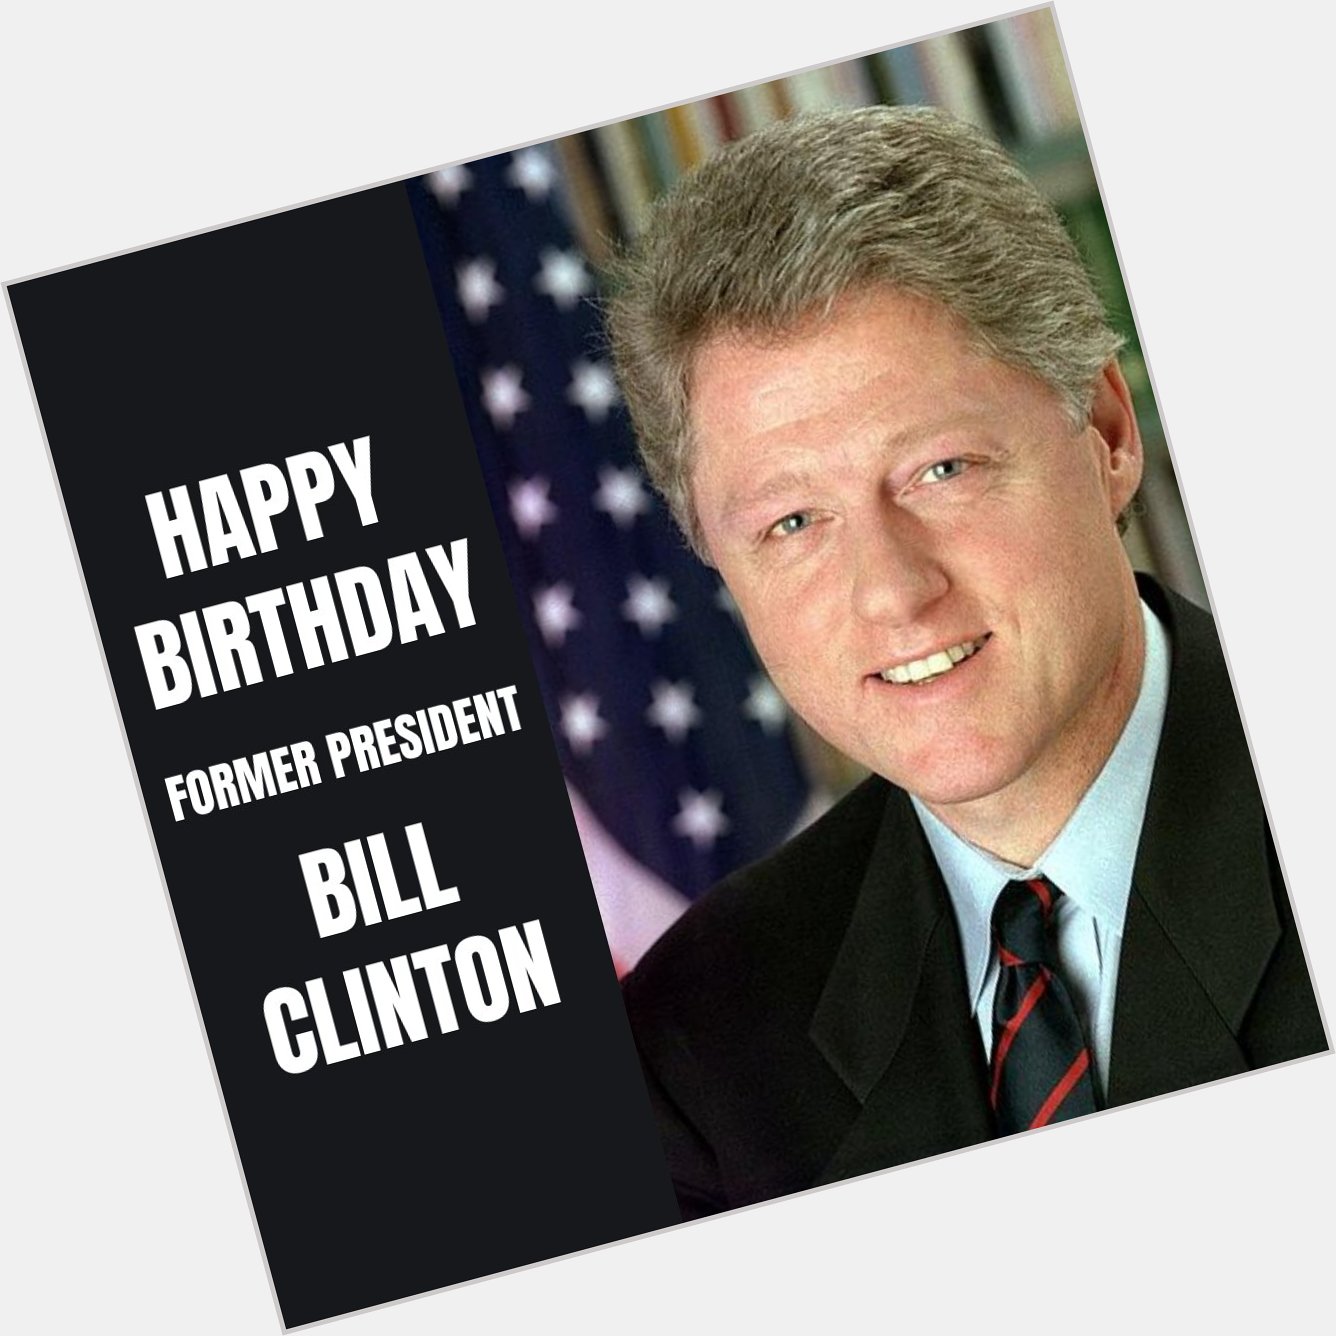 Happy Birthday to former President Bill Clinton! 